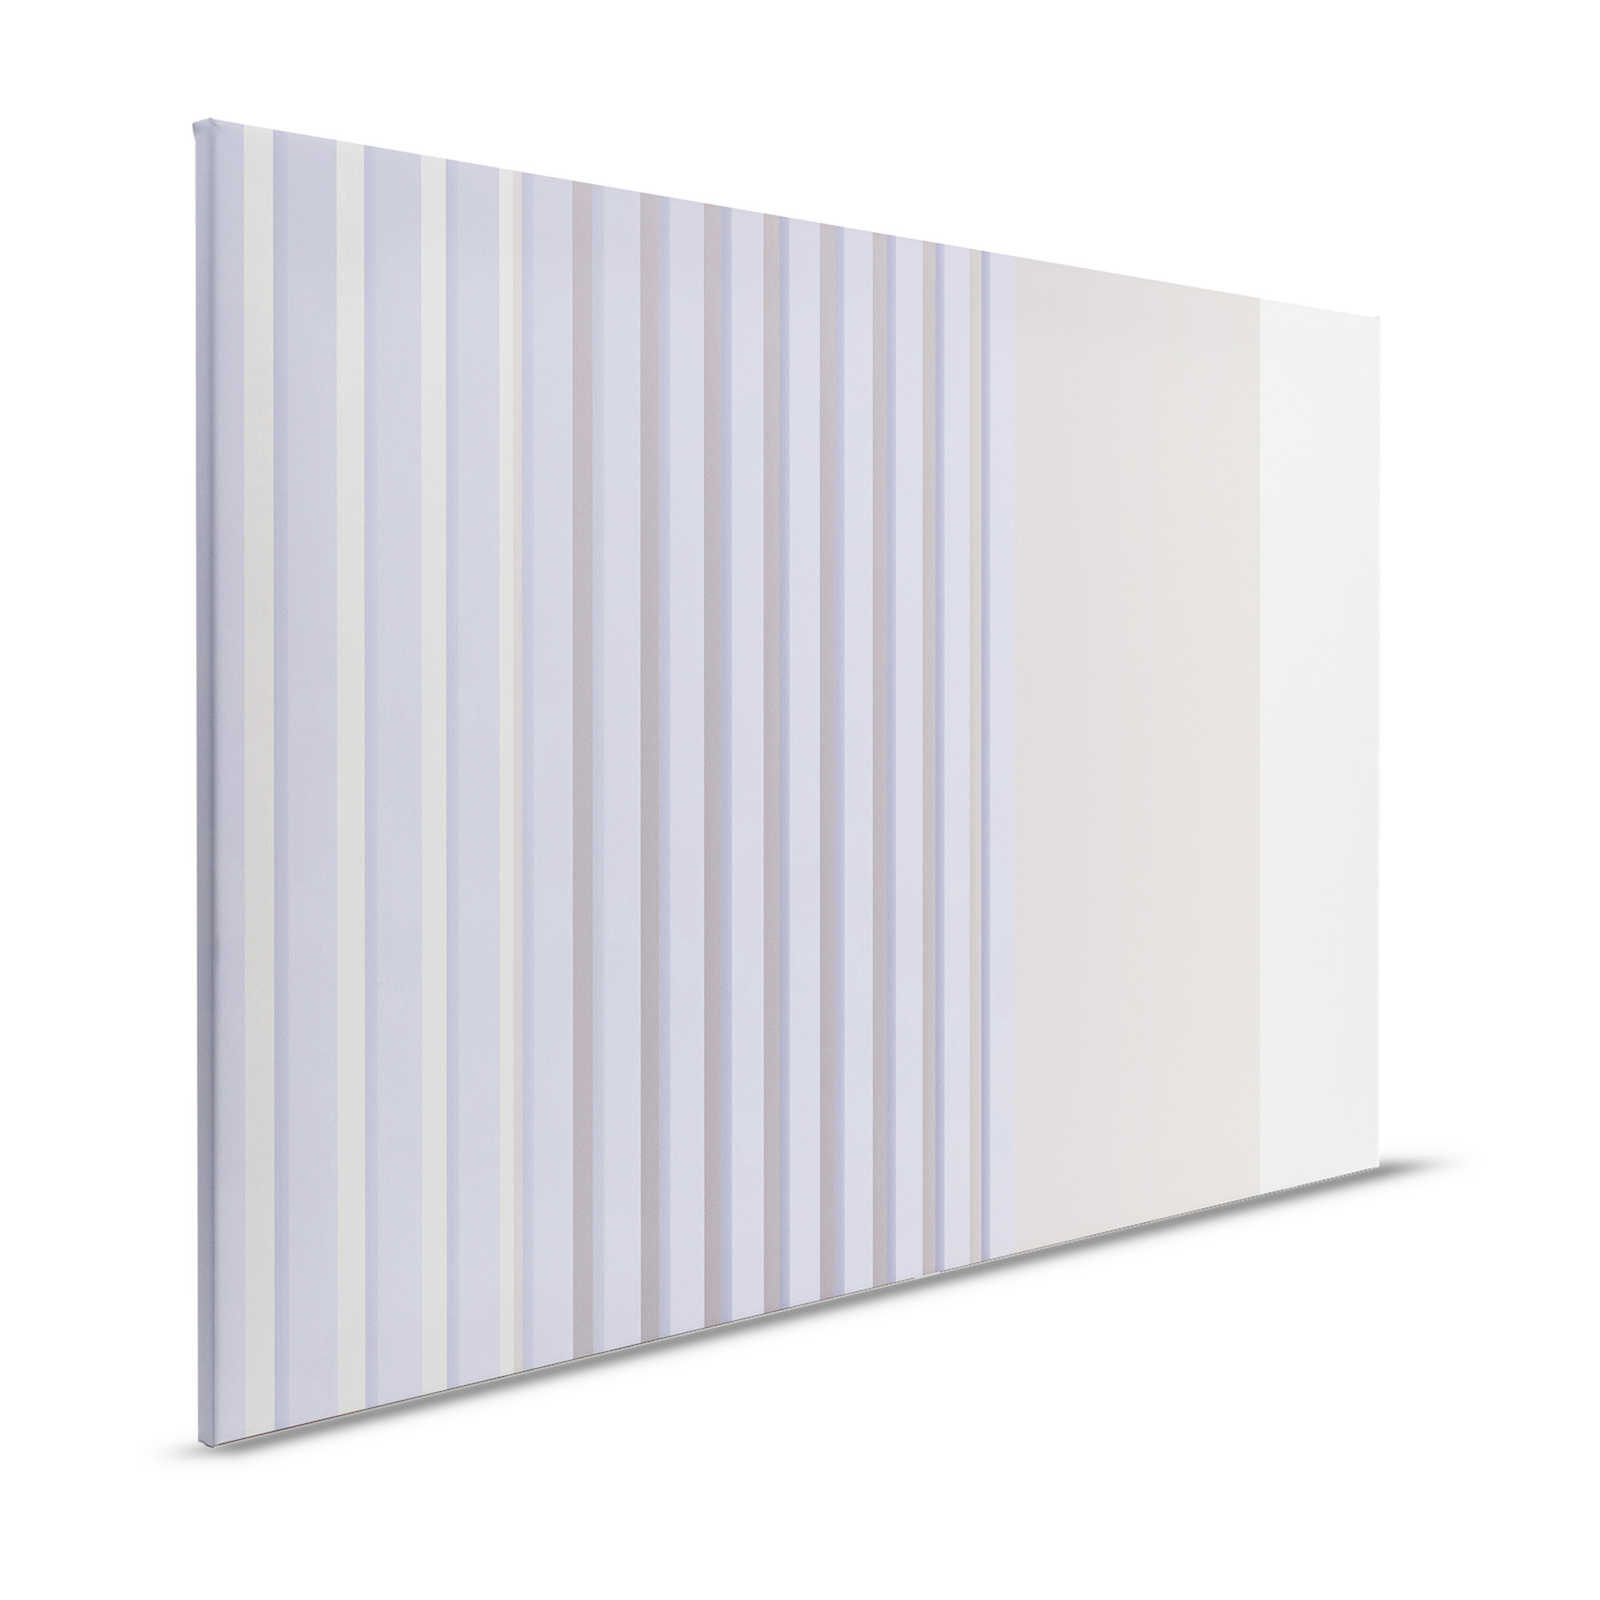 Illusion Room 1 - Canvas painting 3D Stripe Design in Purple & Grey - 1.20 m x 0.80 m
